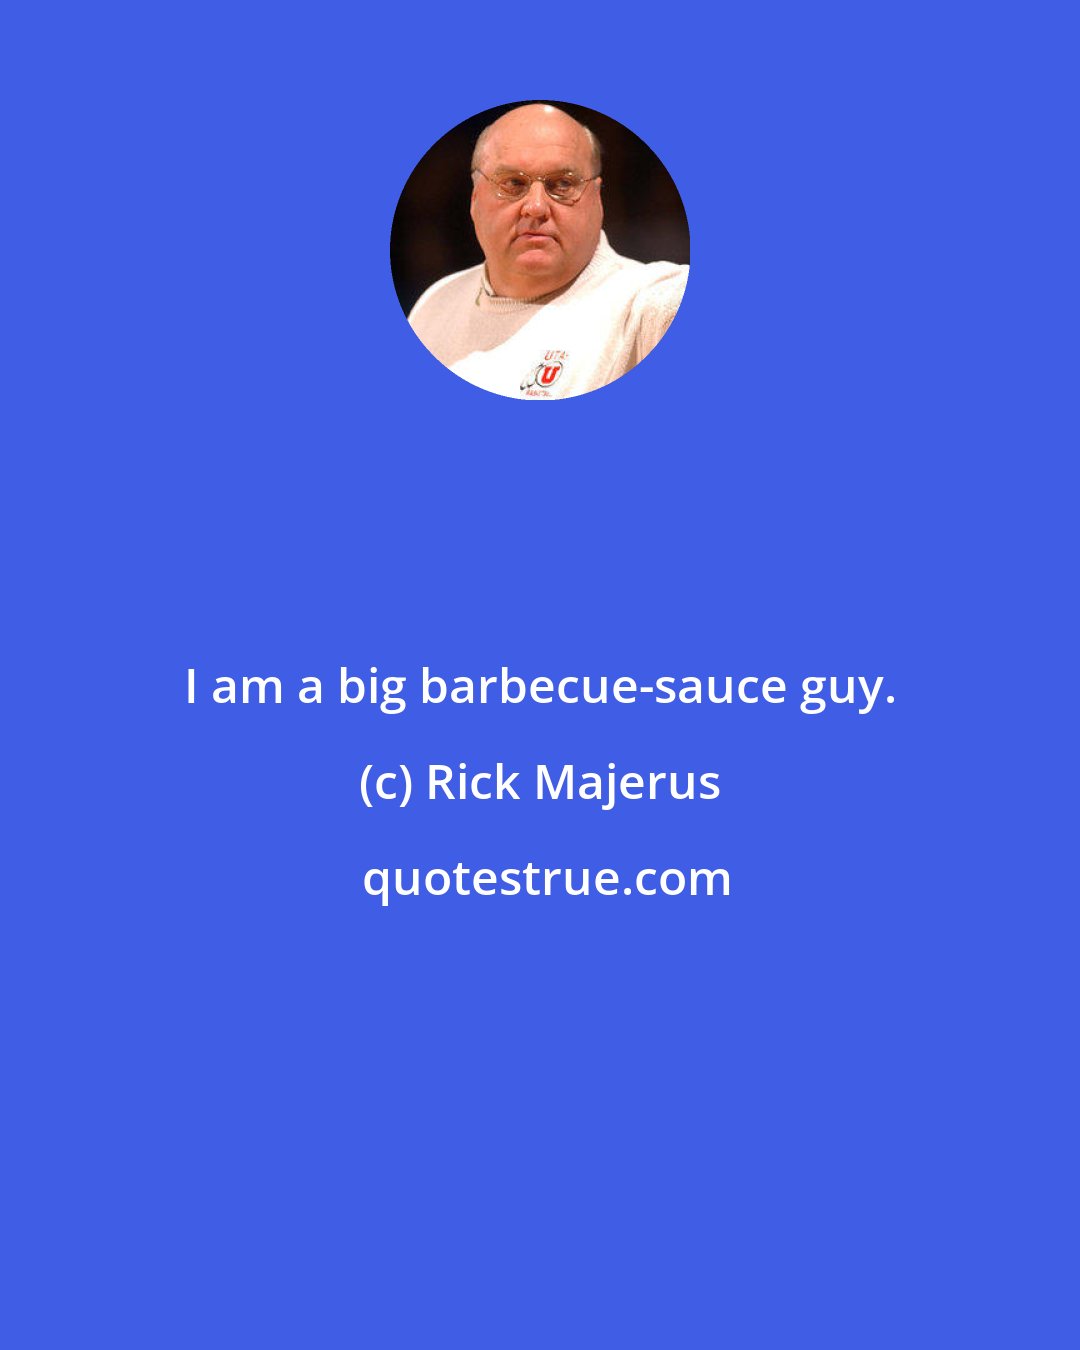 Rick Majerus: I am a big barbecue-sauce guy.